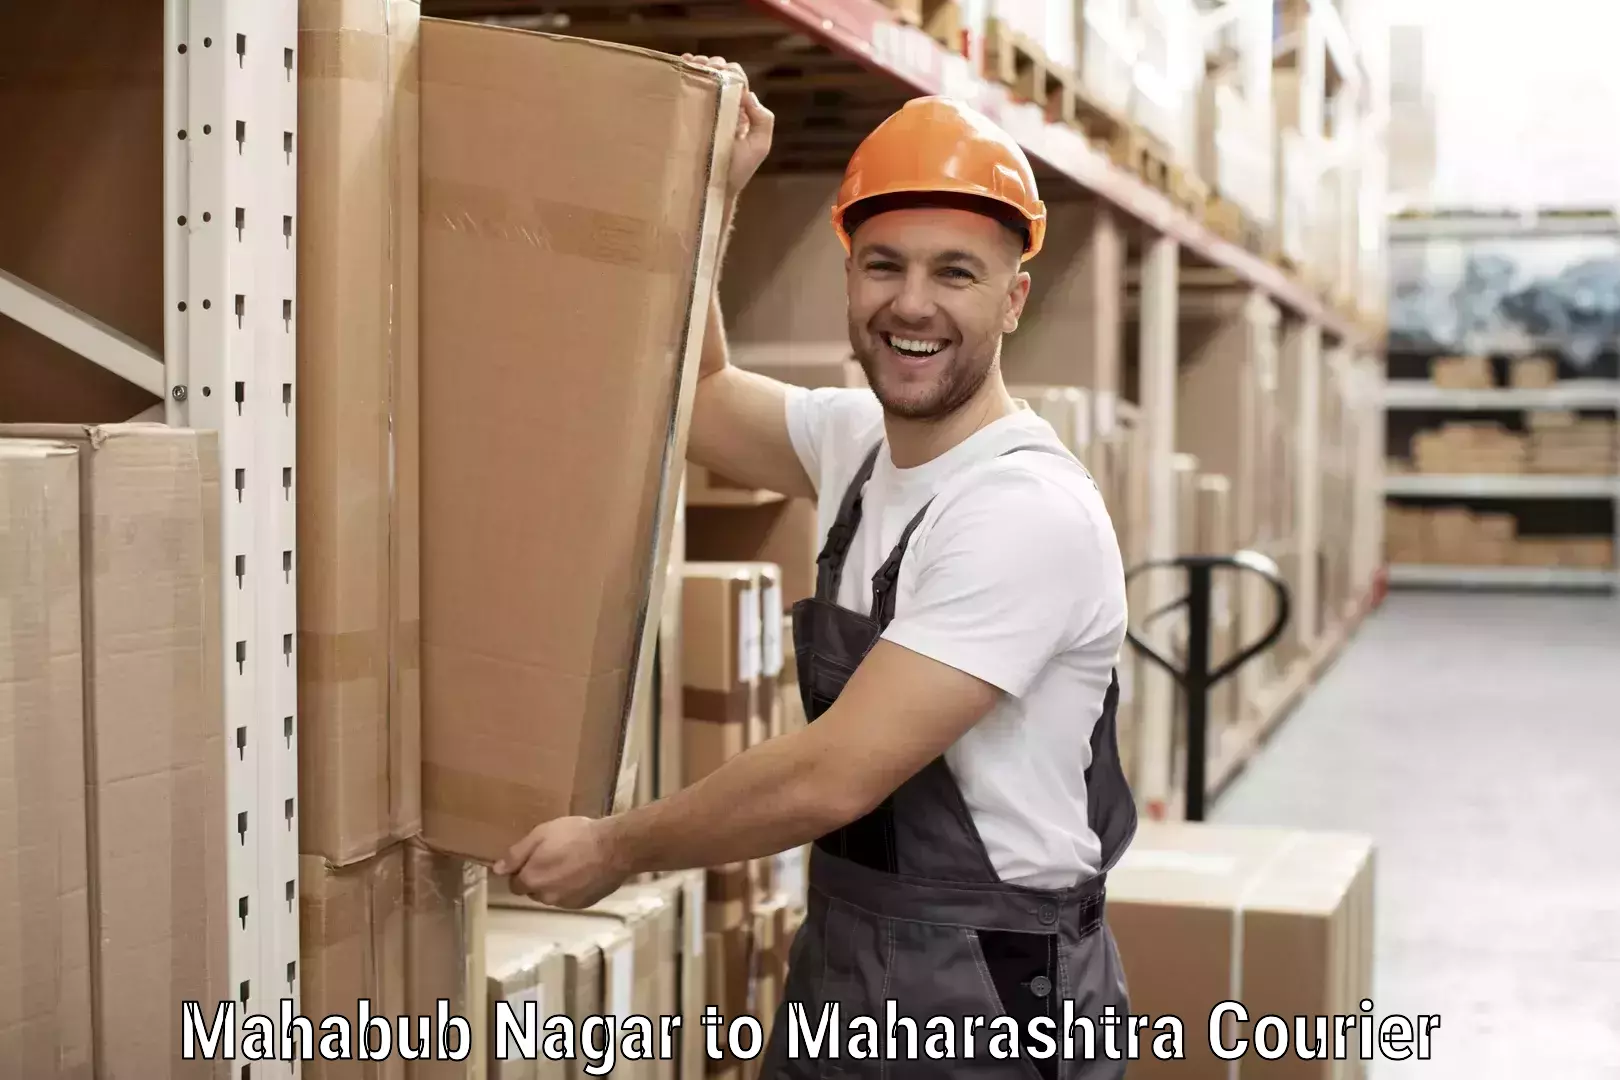 Courier service innovation Mahabub Nagar to Ichalkaranji